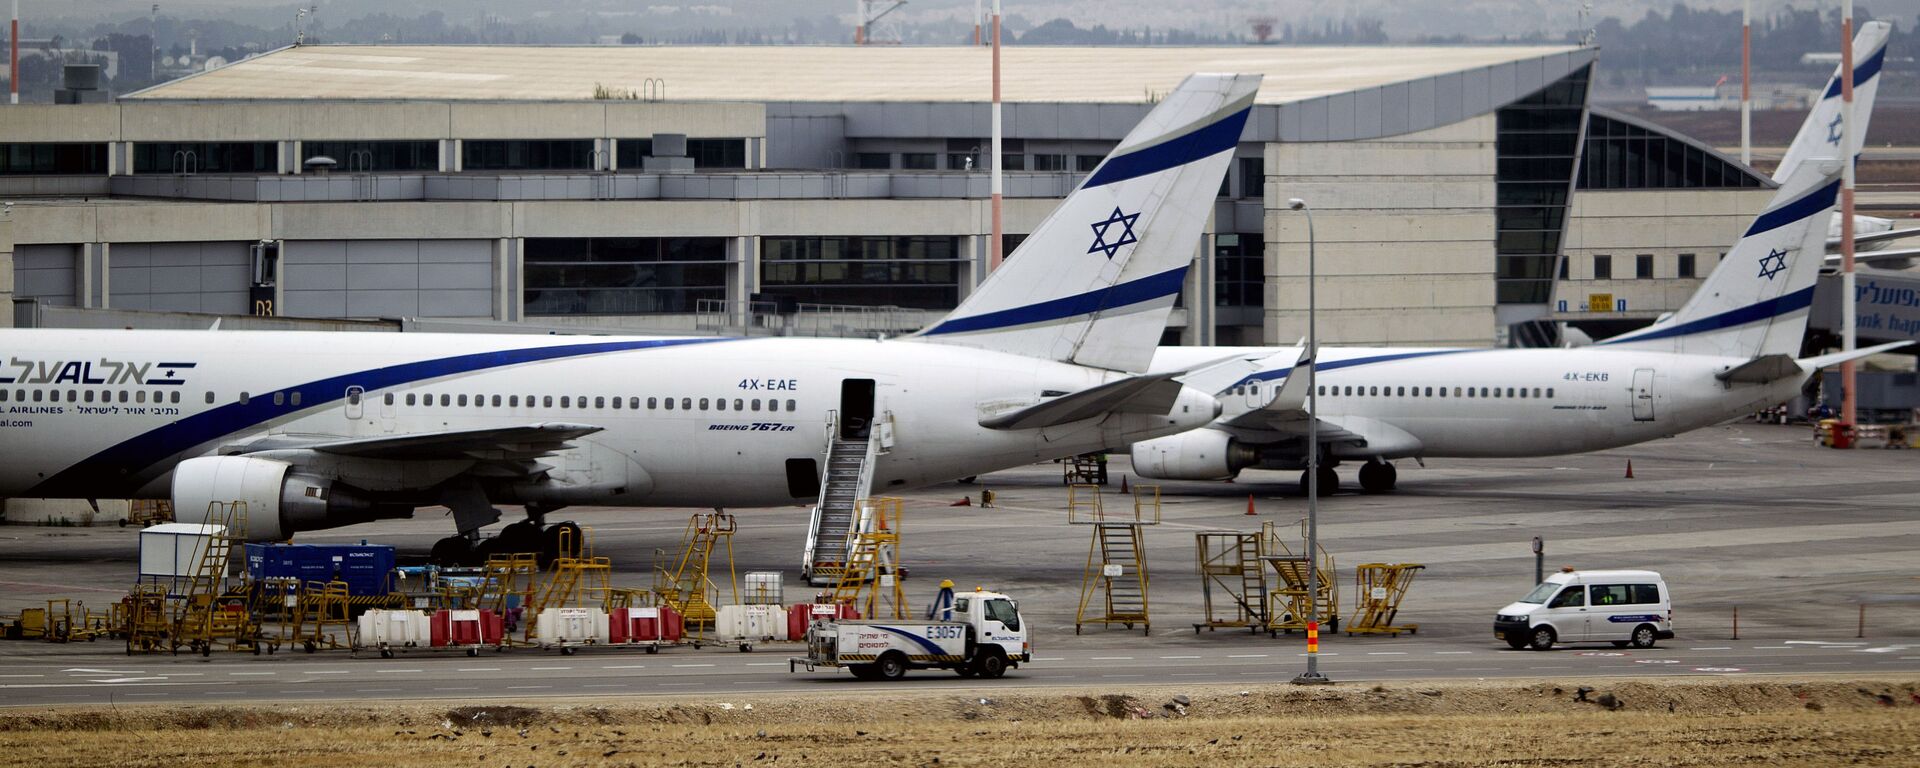 مطار بن غوريون الدولي في تل أبيب، إسرائيل 21 أبريل/ نيسان 2013 - سبوتنيك عربي, 1920, 26.02.2022